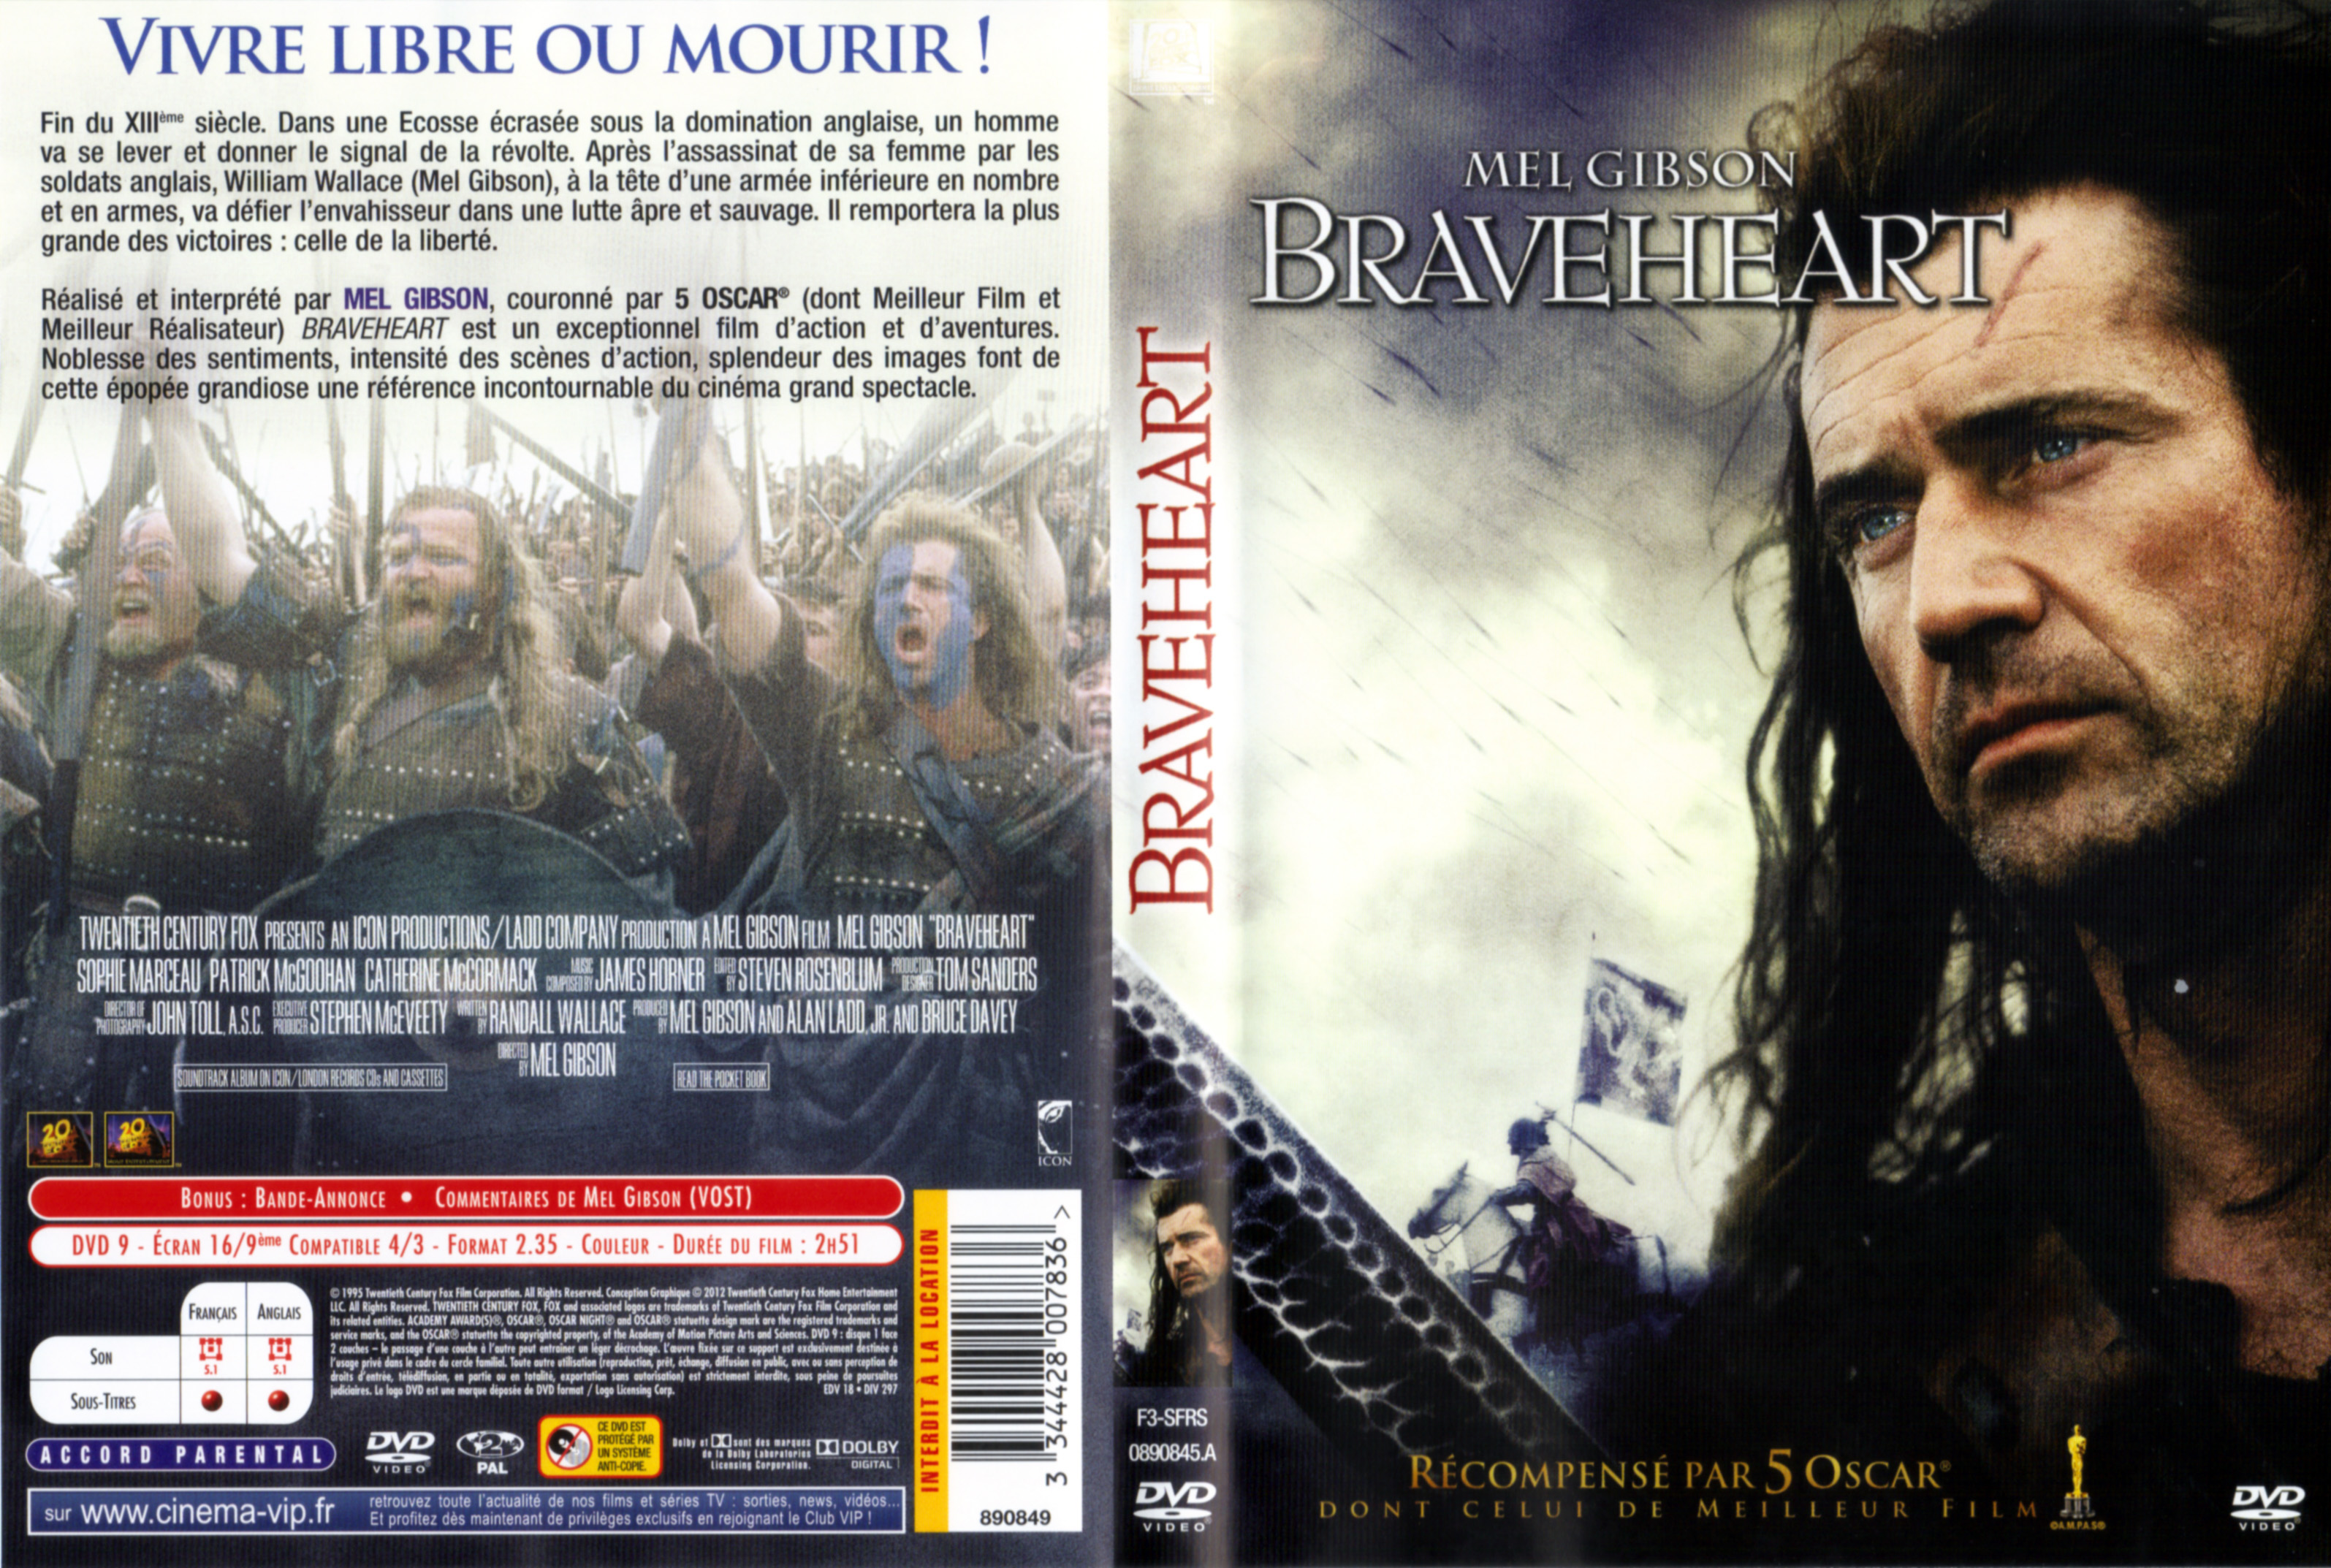 Jaquette DVD Braveheart v5